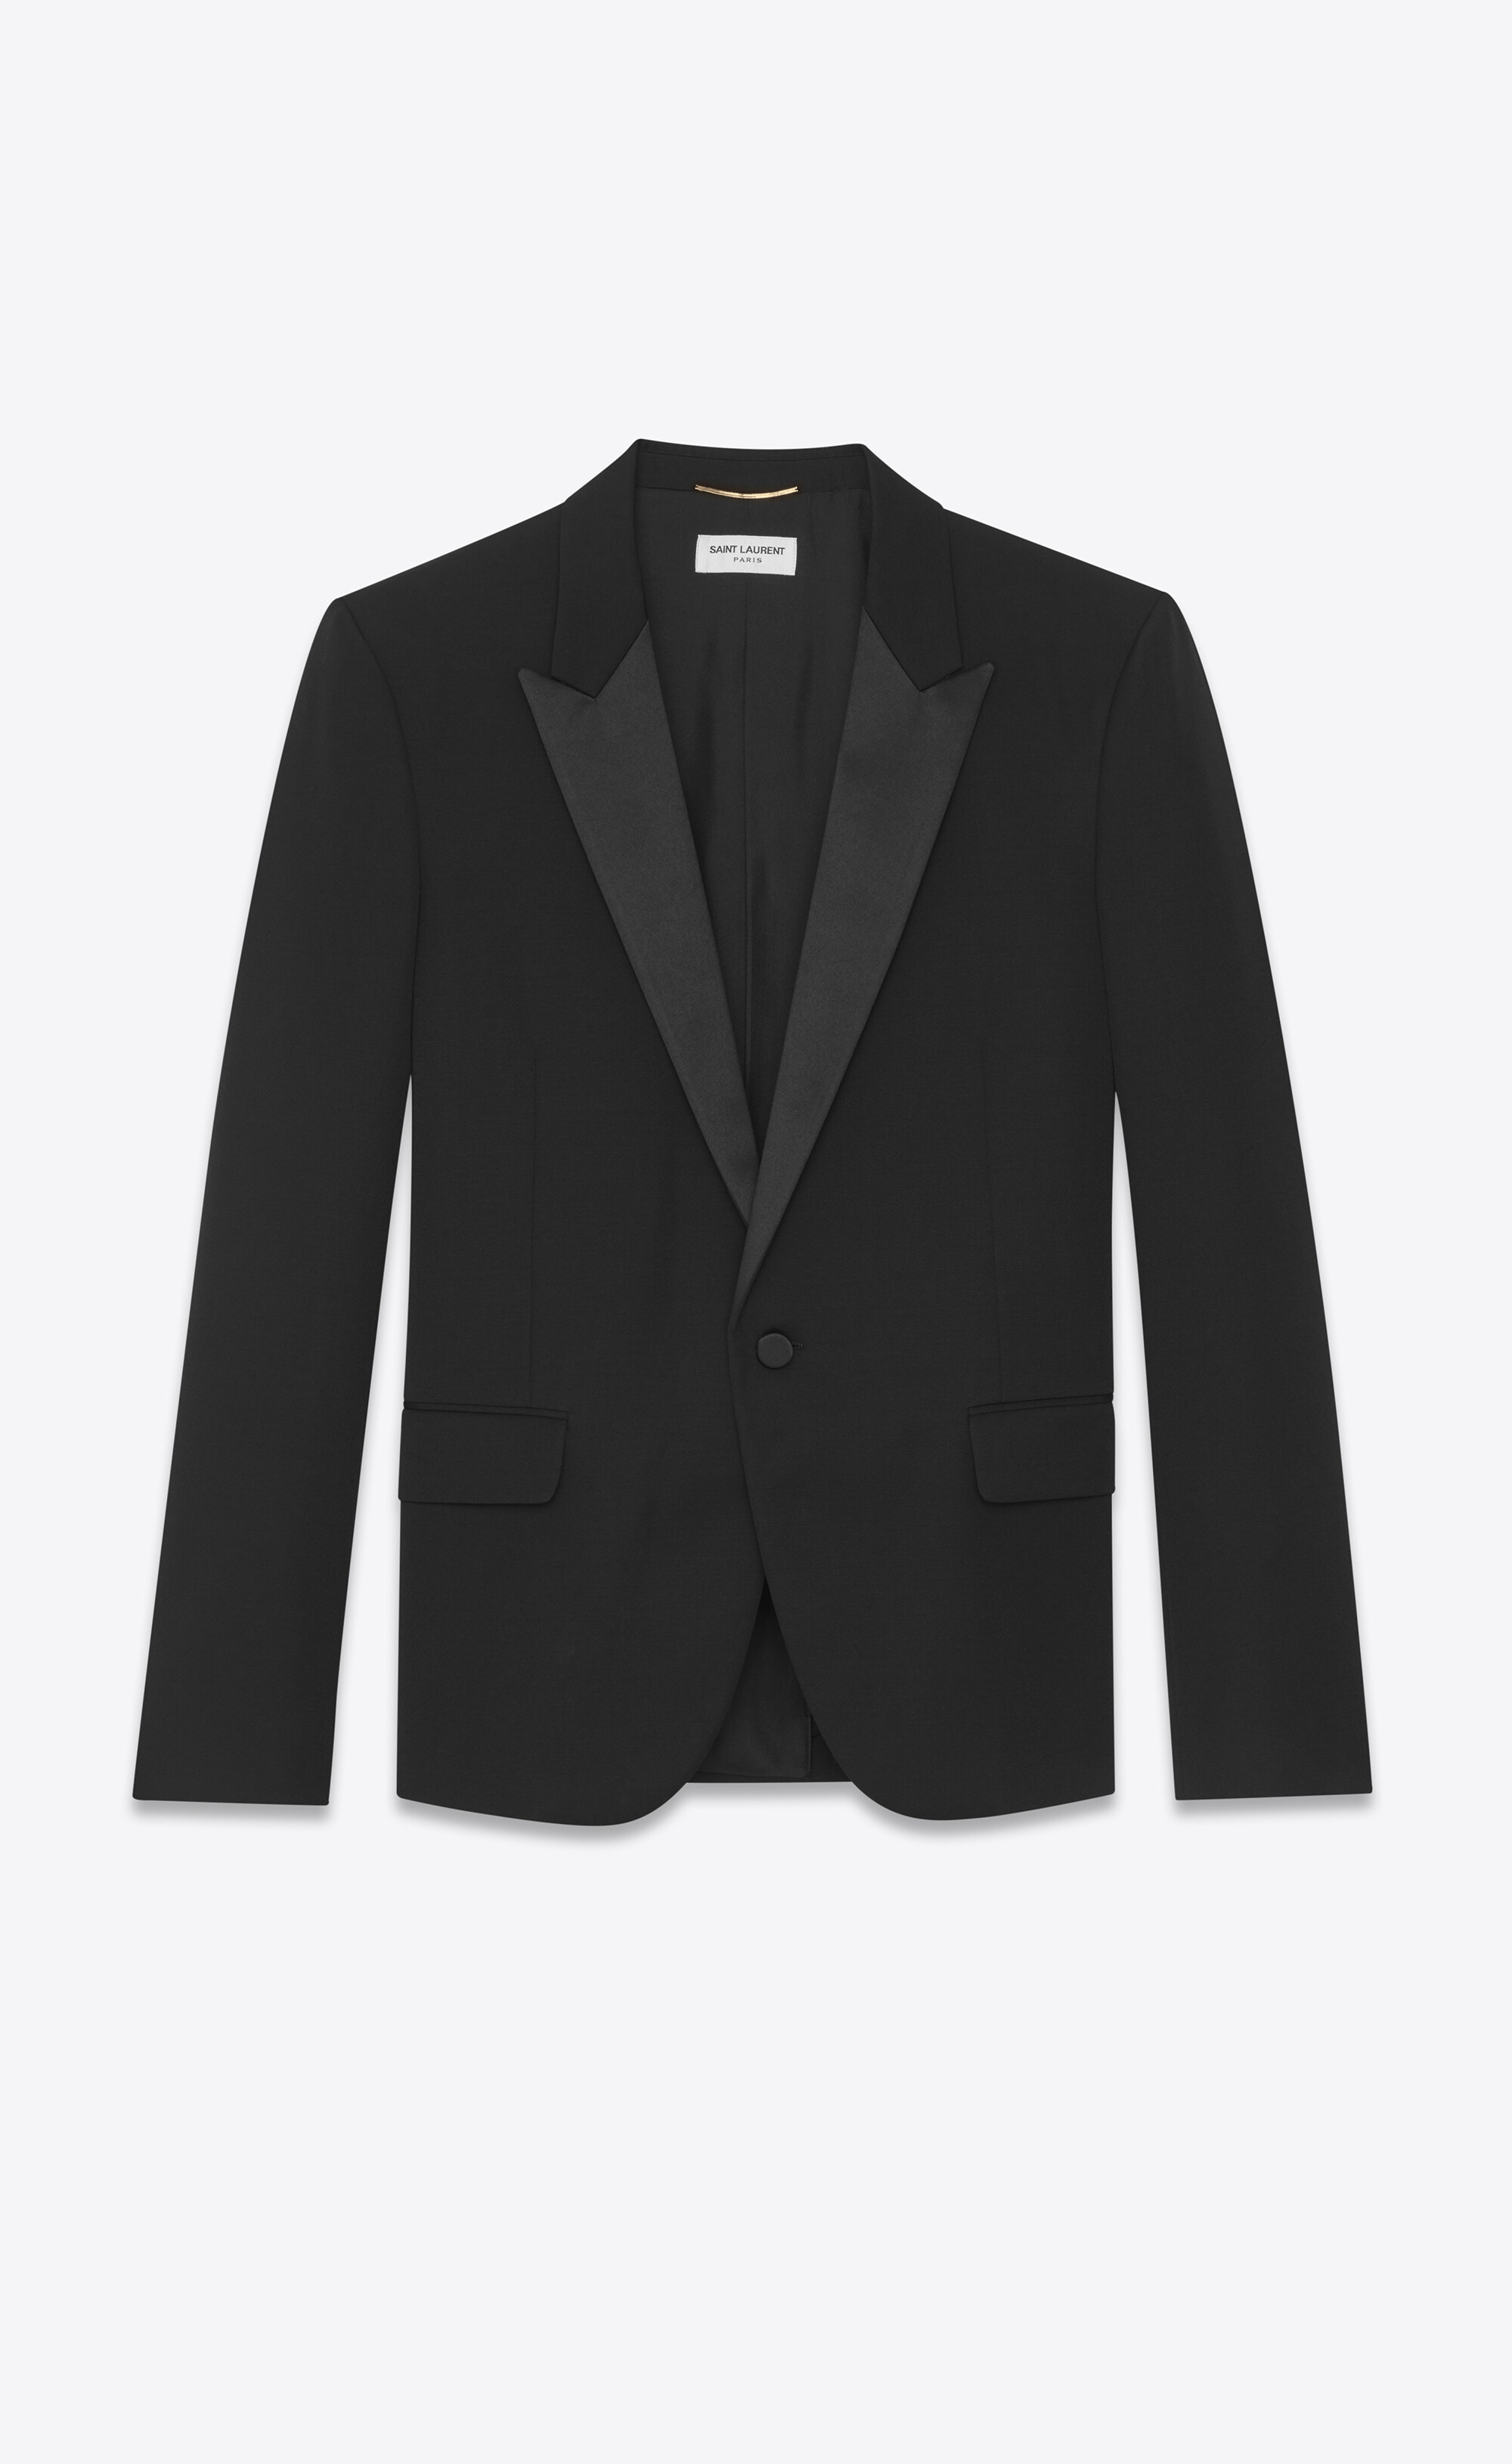 Jean Yves 1 Button Peak Lapel Black 100% Wool Tuxedo Jackets Wedding Sizes 36-50 